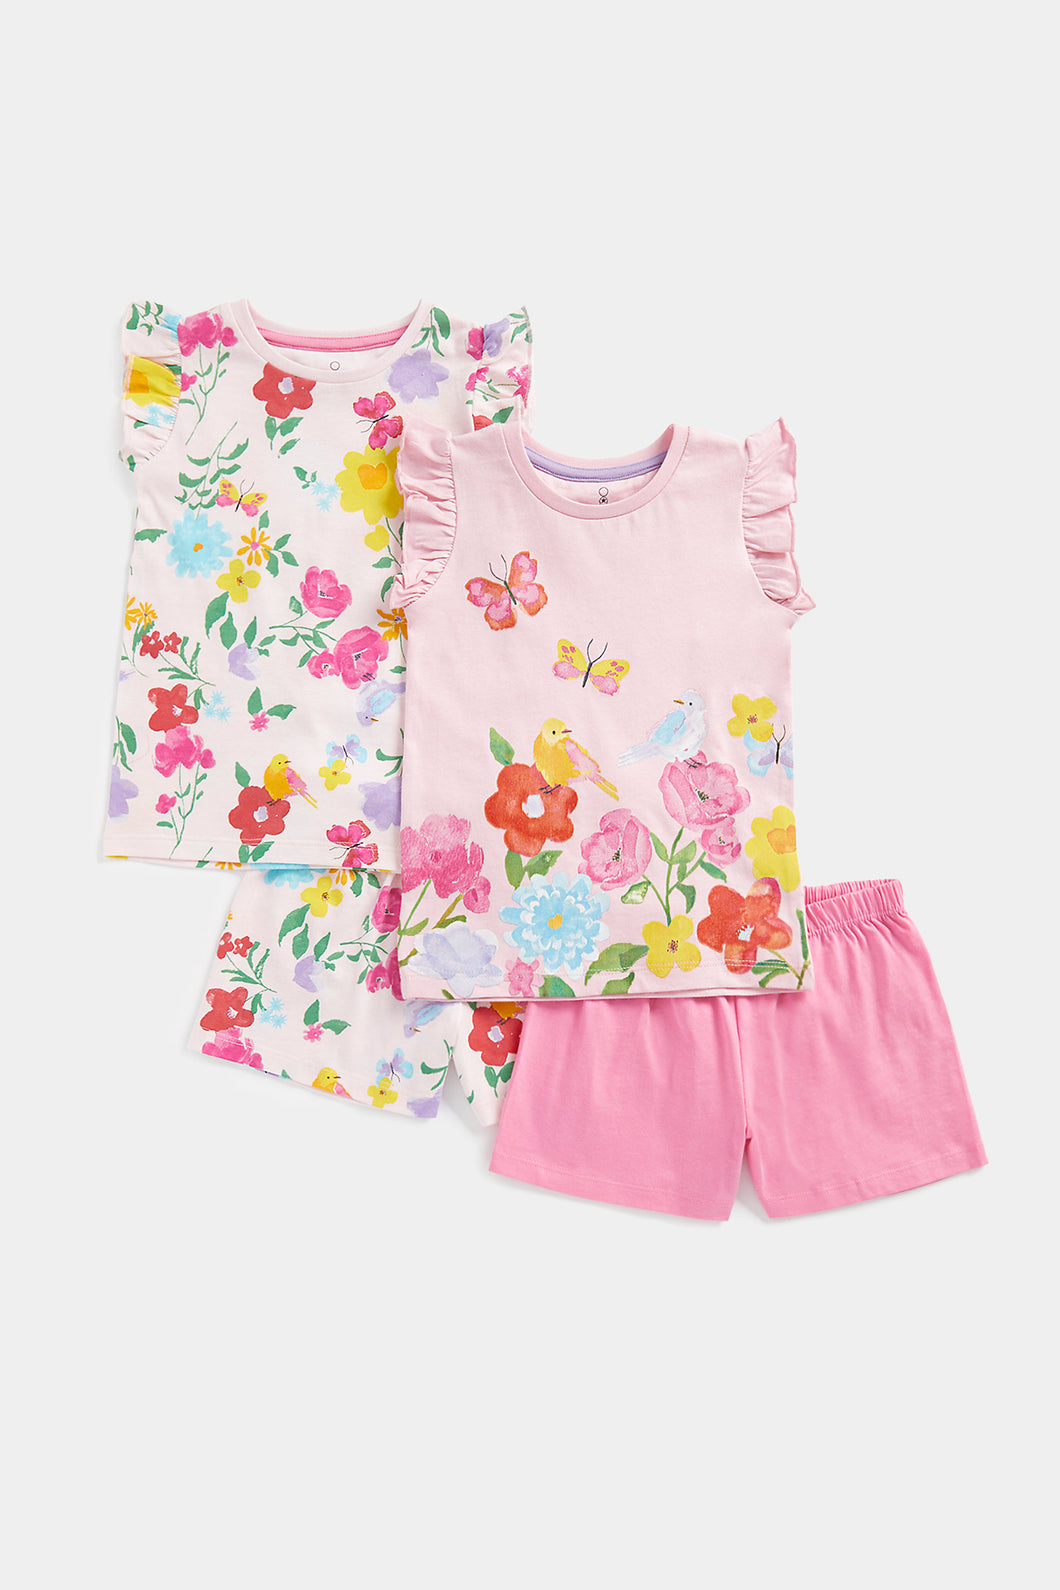 Mothercare Garden Floral Shortie Pyjamas - 2 Pack